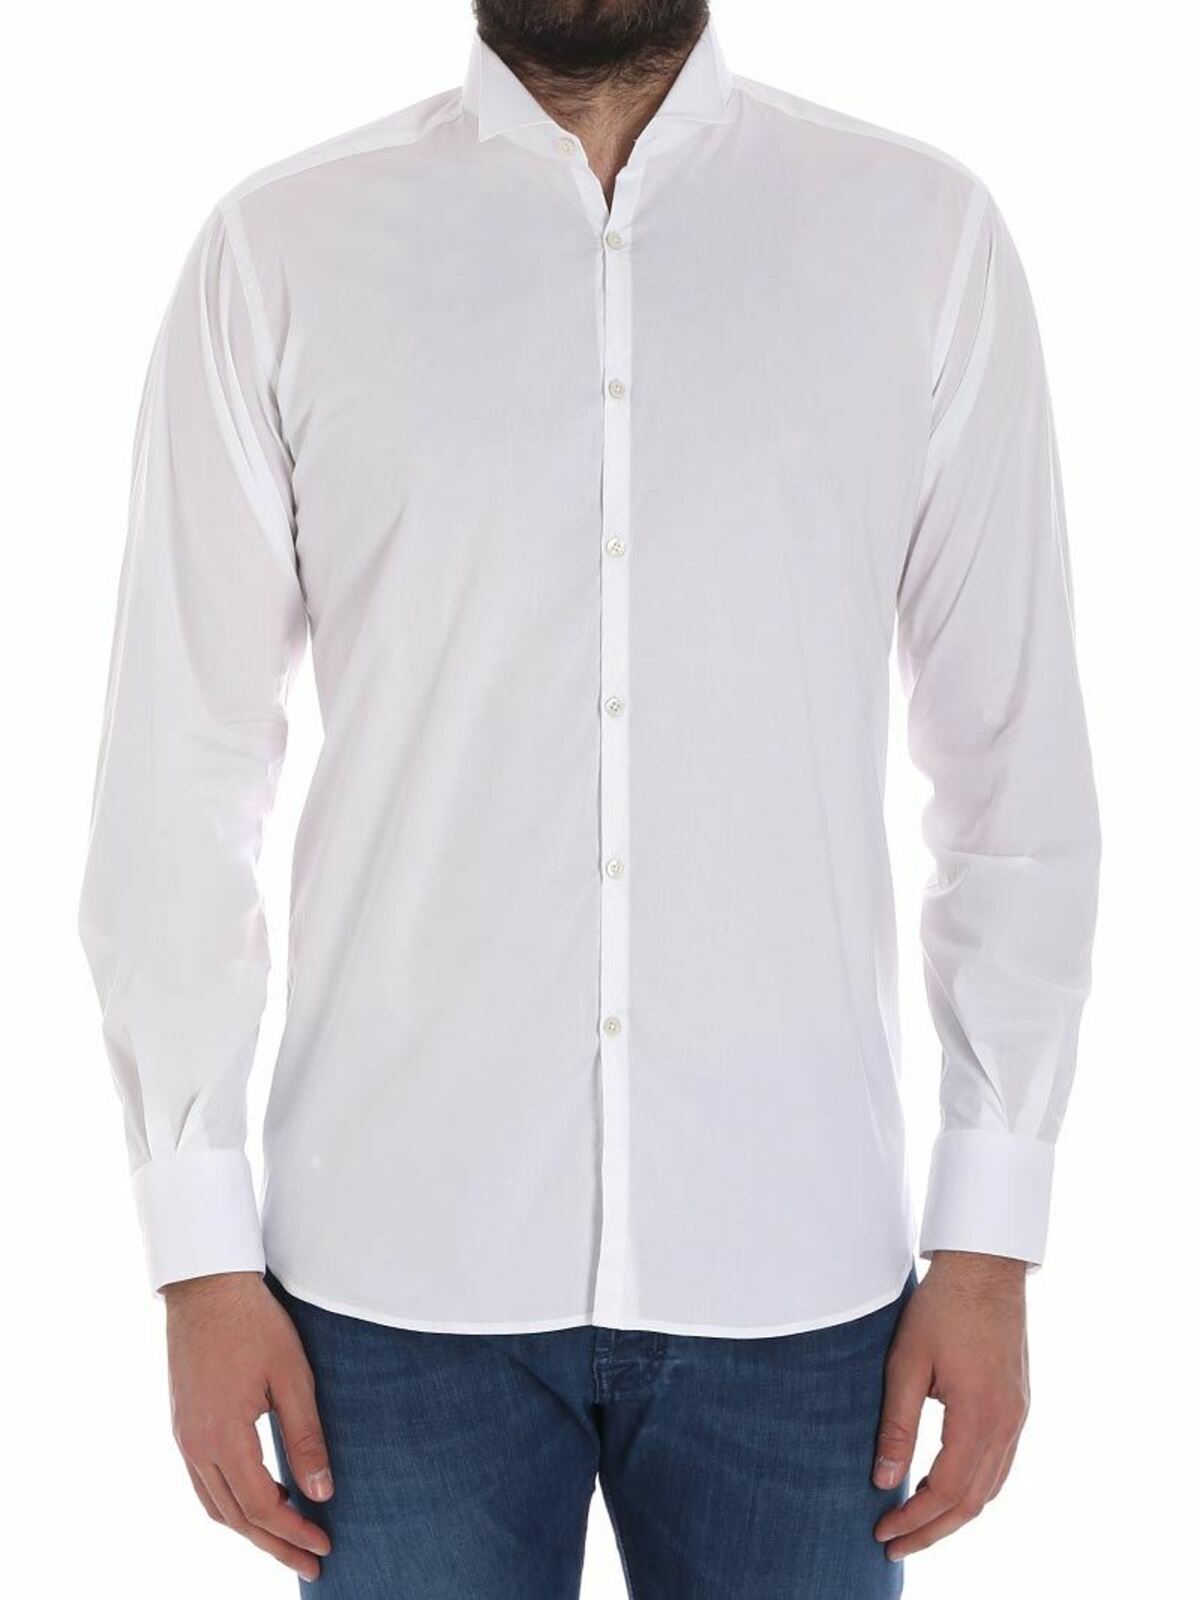 Karl Lagerfeld White Cotton Shirt